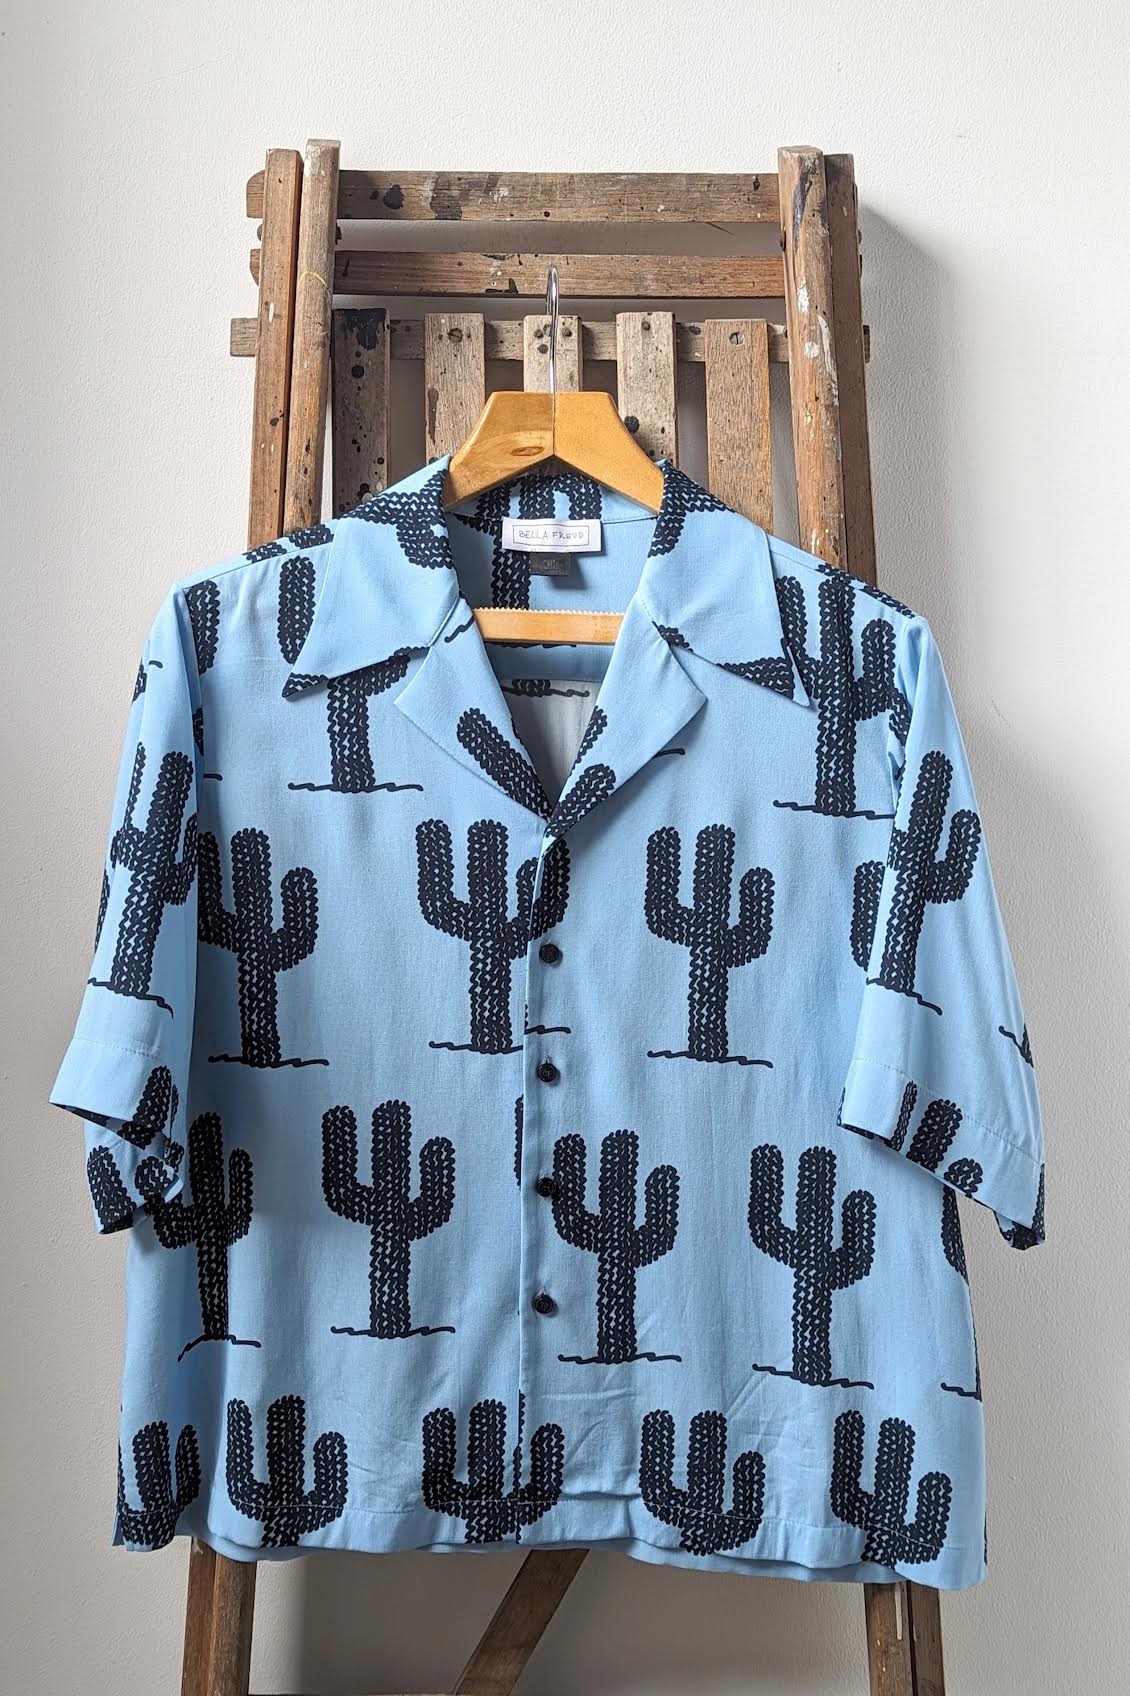 Bella Freud - Cactus Blue Holiday Shirt & Shorts Set